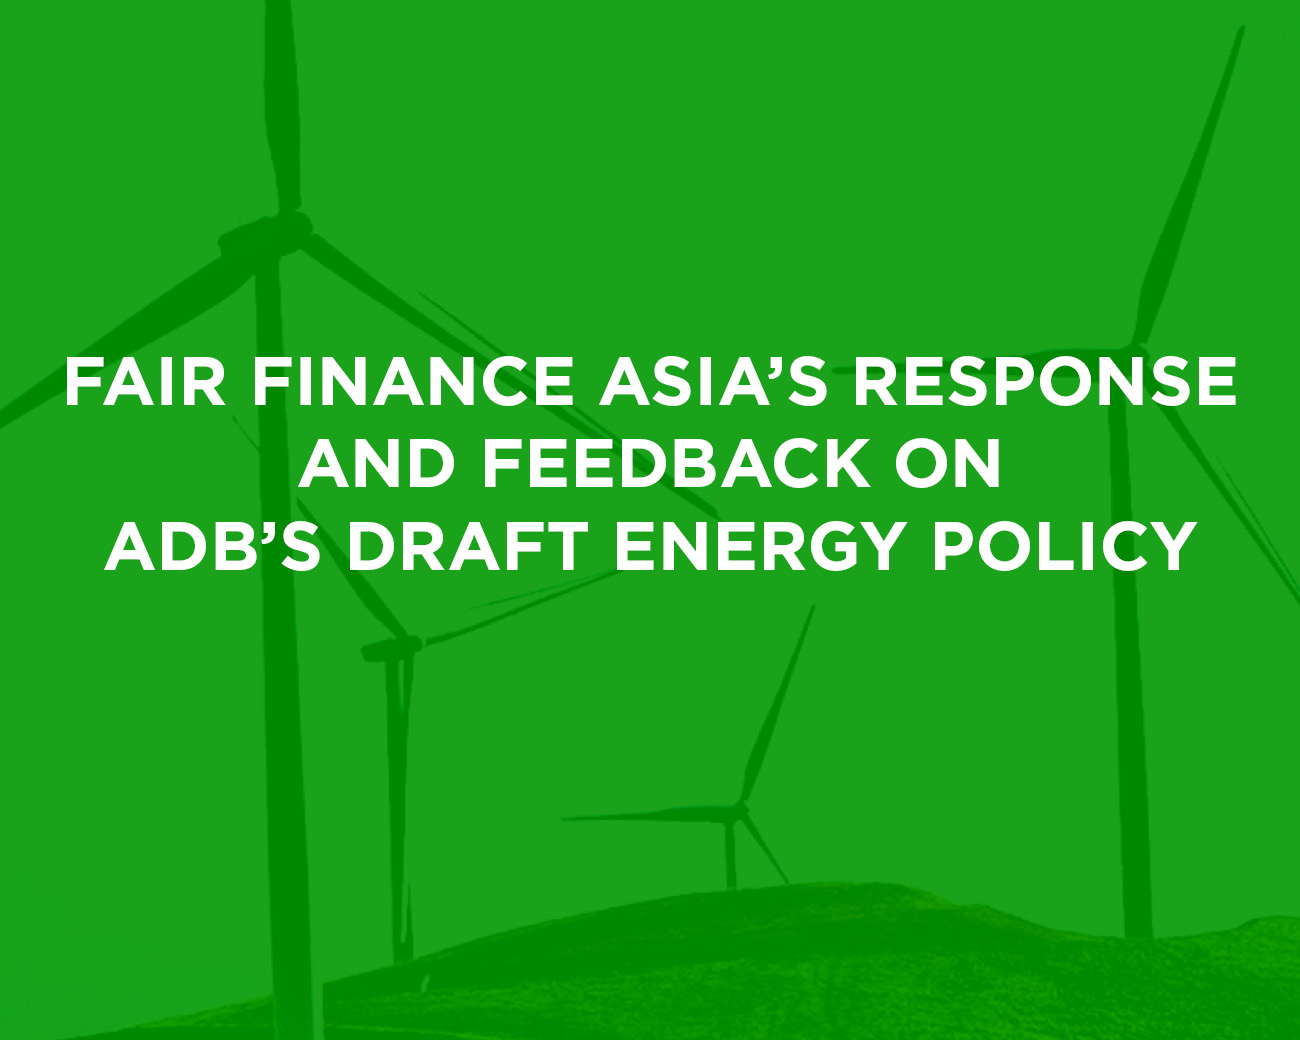 FAIR FINANCE ASIA’S RESPONSE AND FEEDBACK ON ADB’S DRAFT ENERGY POLICY